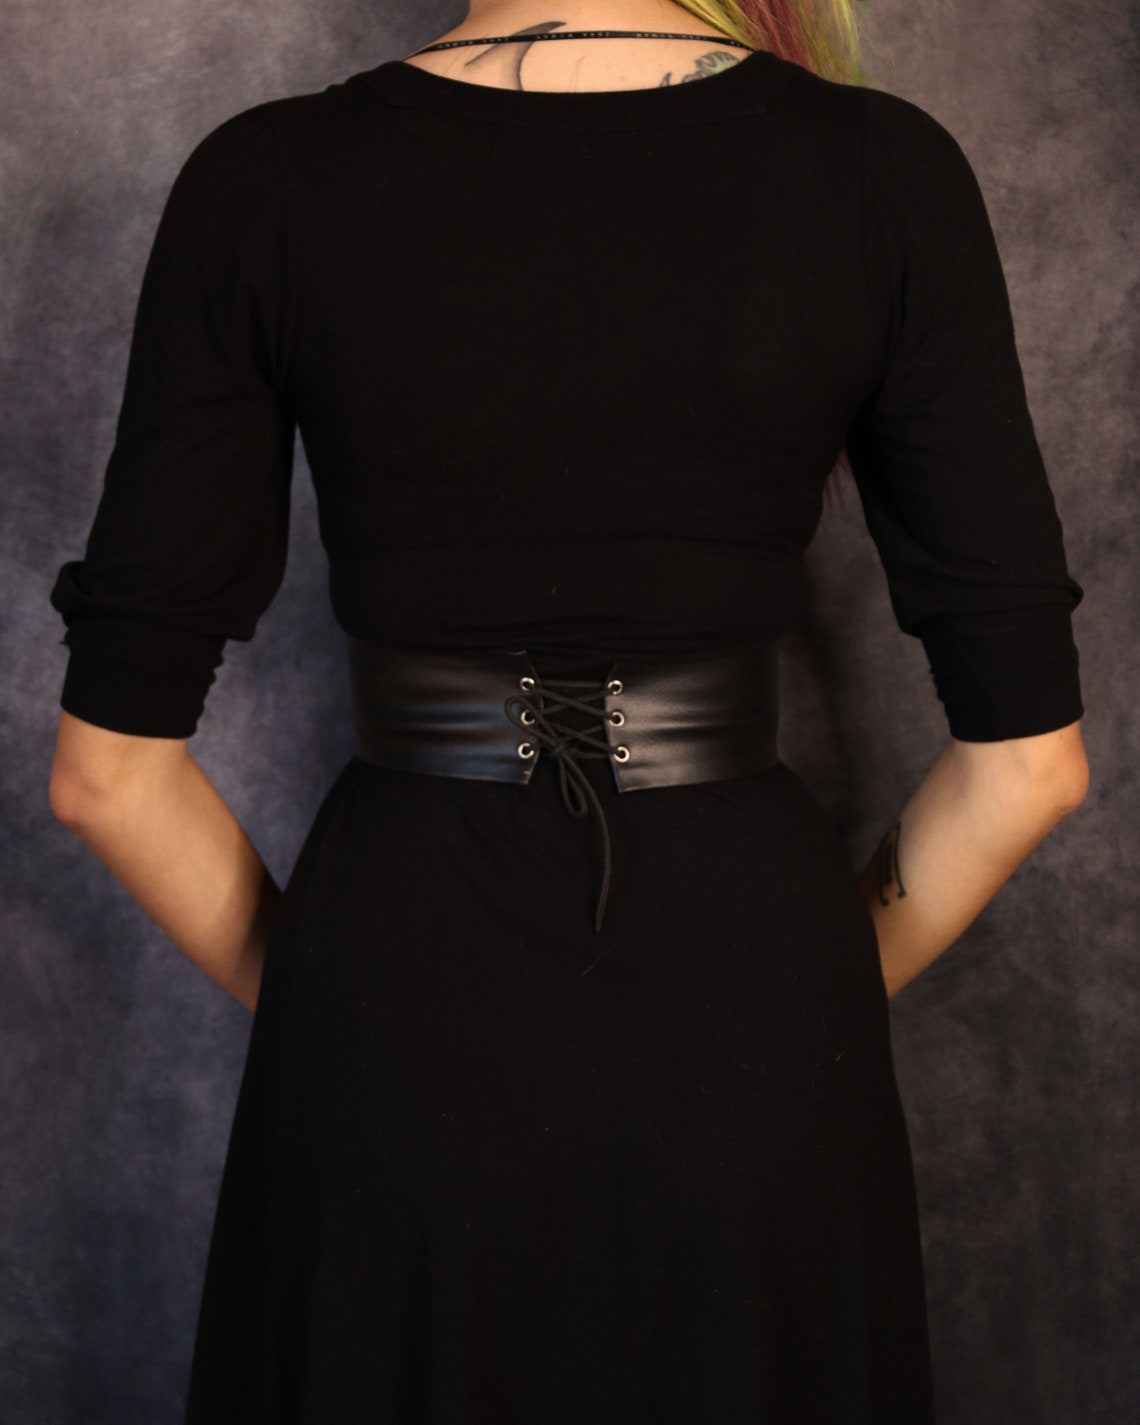 Fantasy waist belt / underbust corset armor with wolf. Eva | Etsy